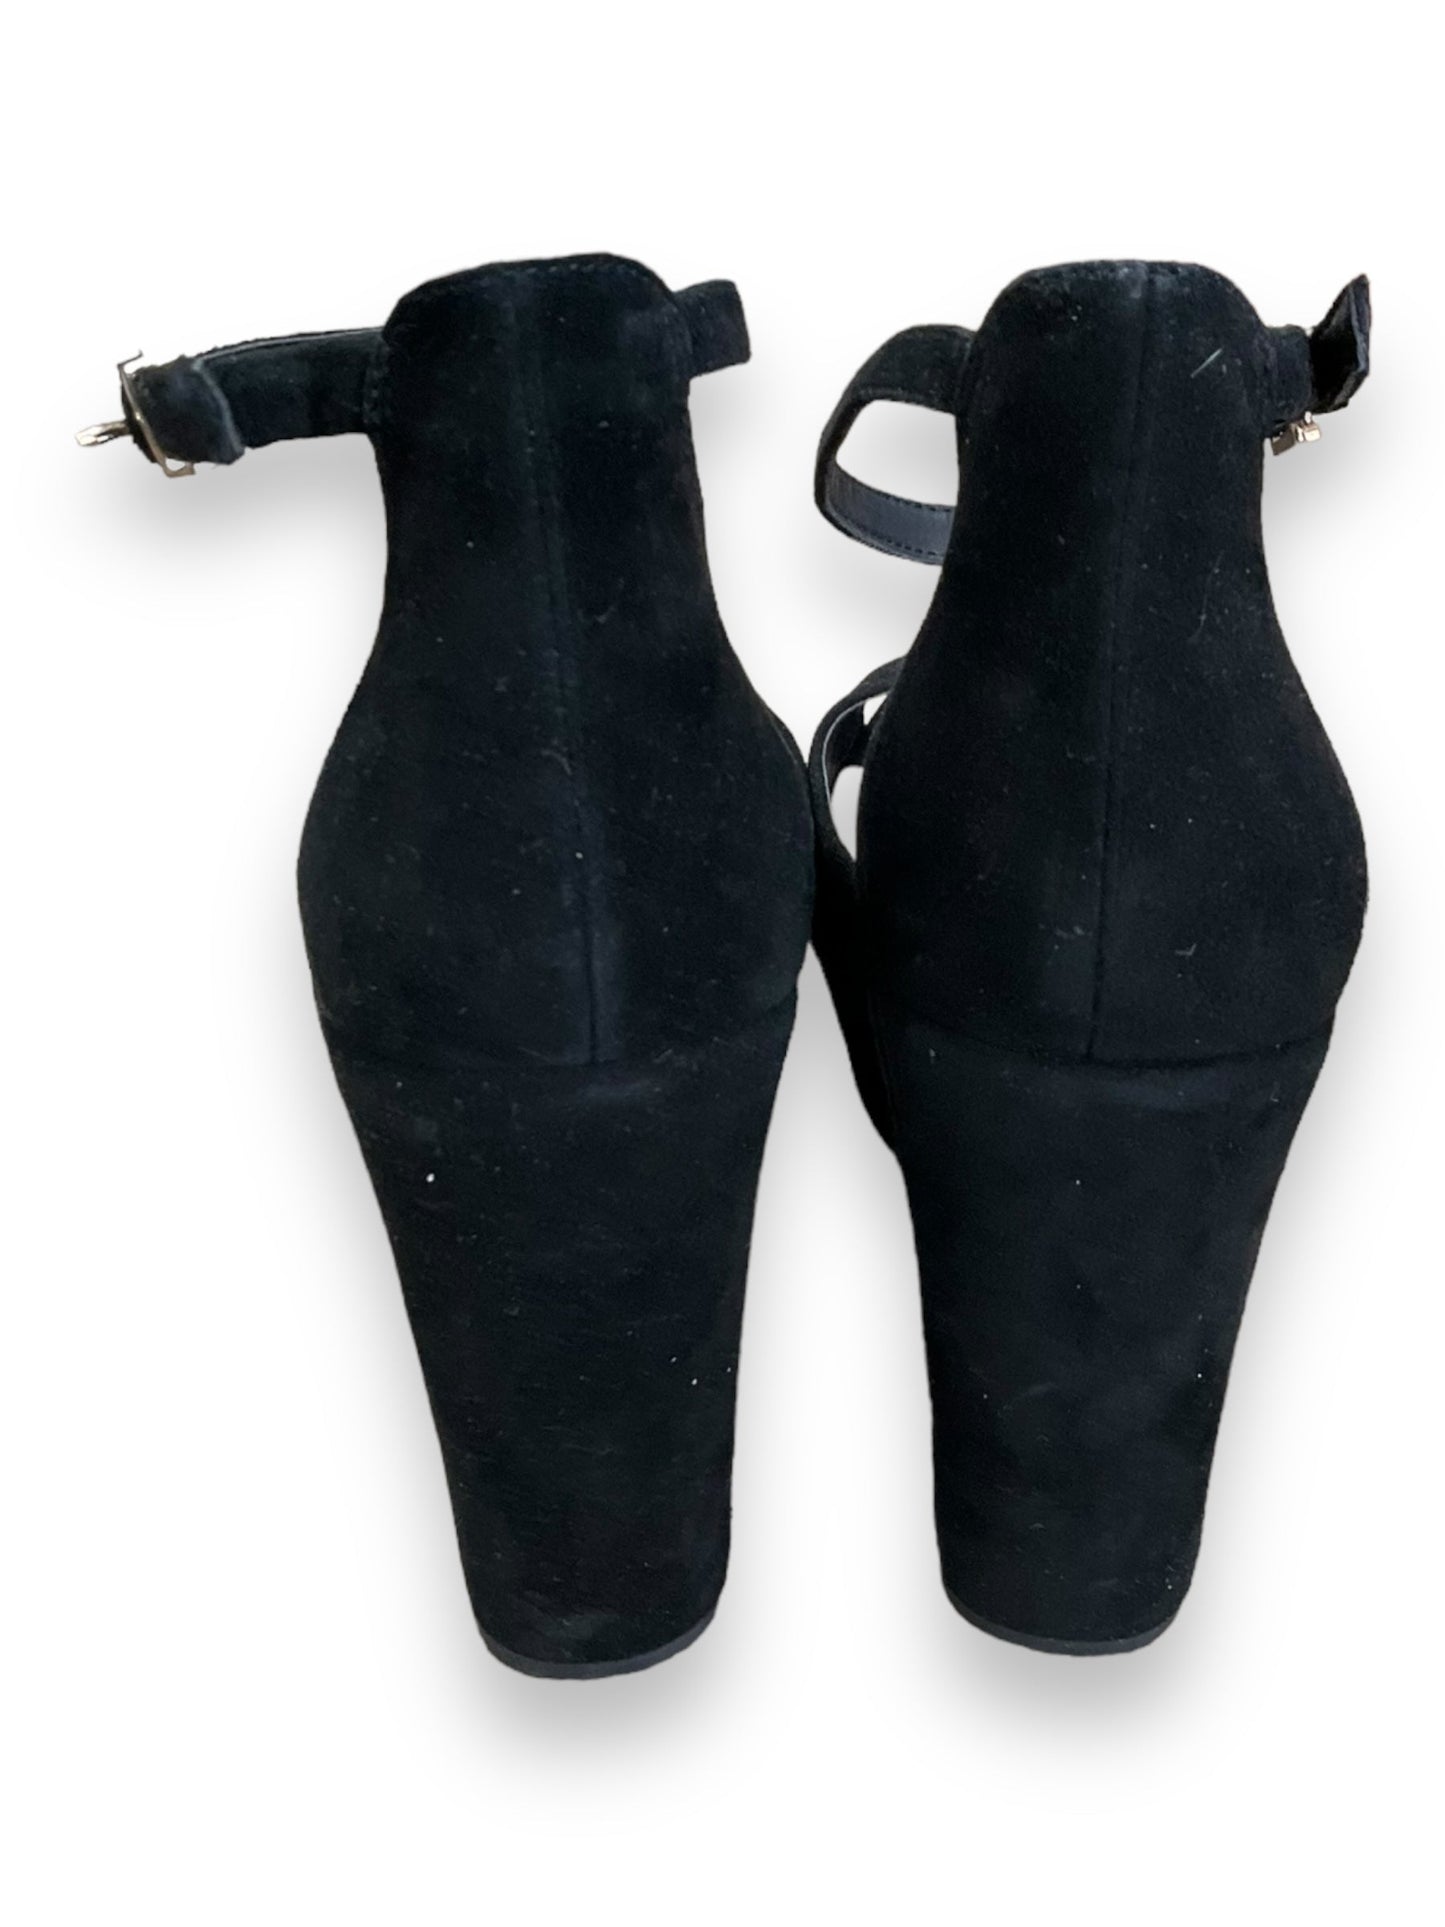 Black Sandals Heels Wedge Vince Camuto, Size 8